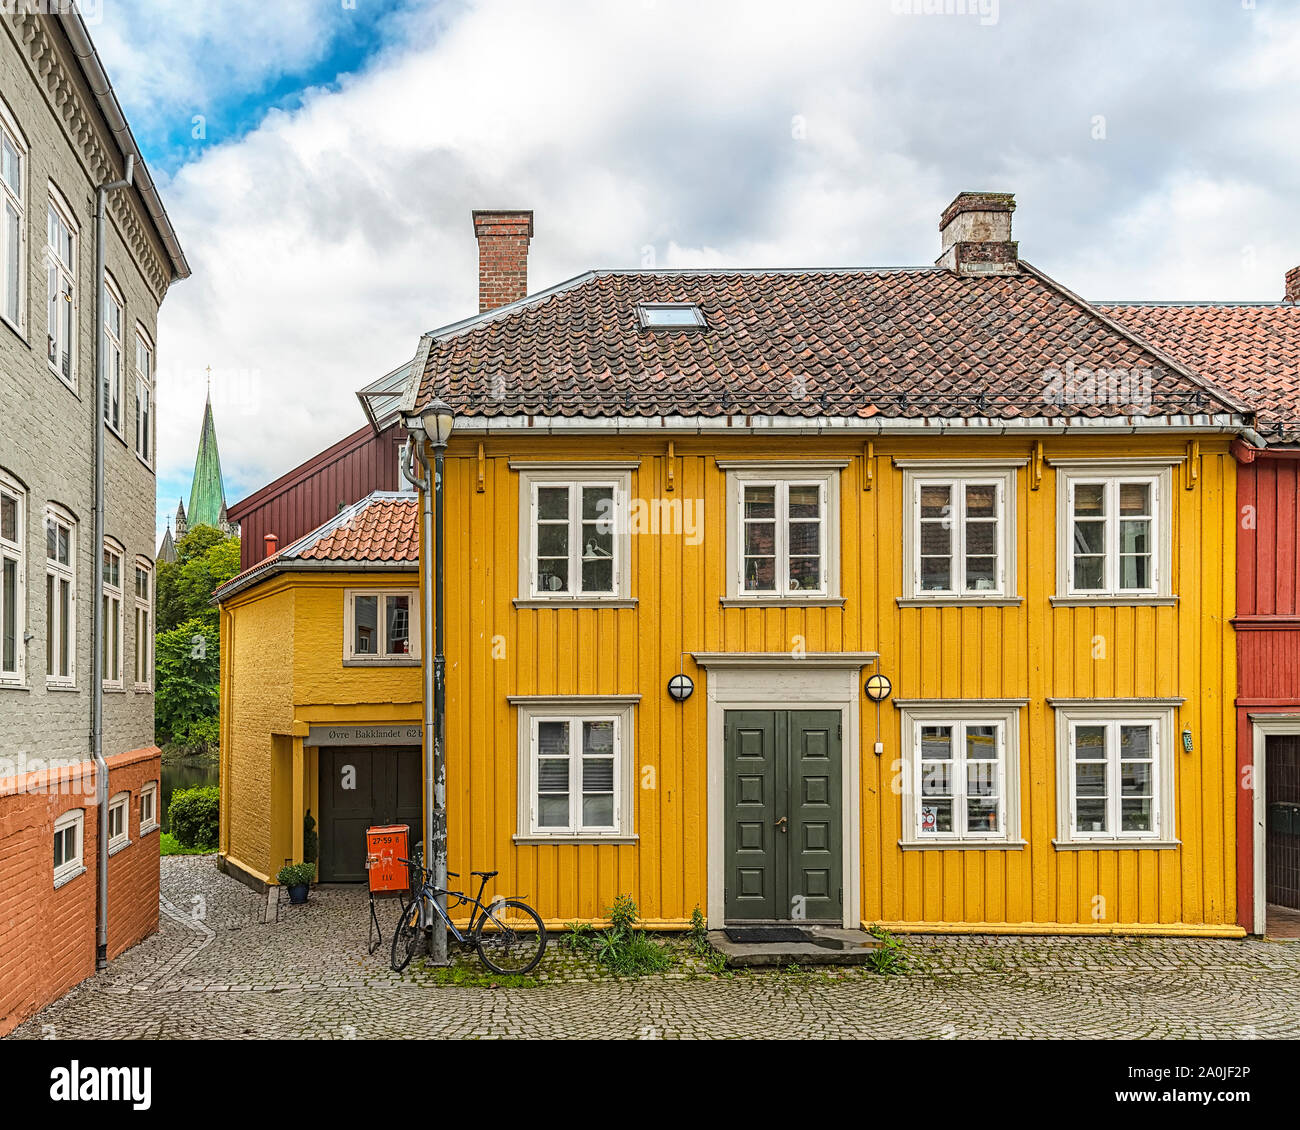 TRONDHEIM, NORWAY - SEPTEMBER 07, 2019: Bakklandet is an old town neighborhood in the city of Trondheim. Stock Photo